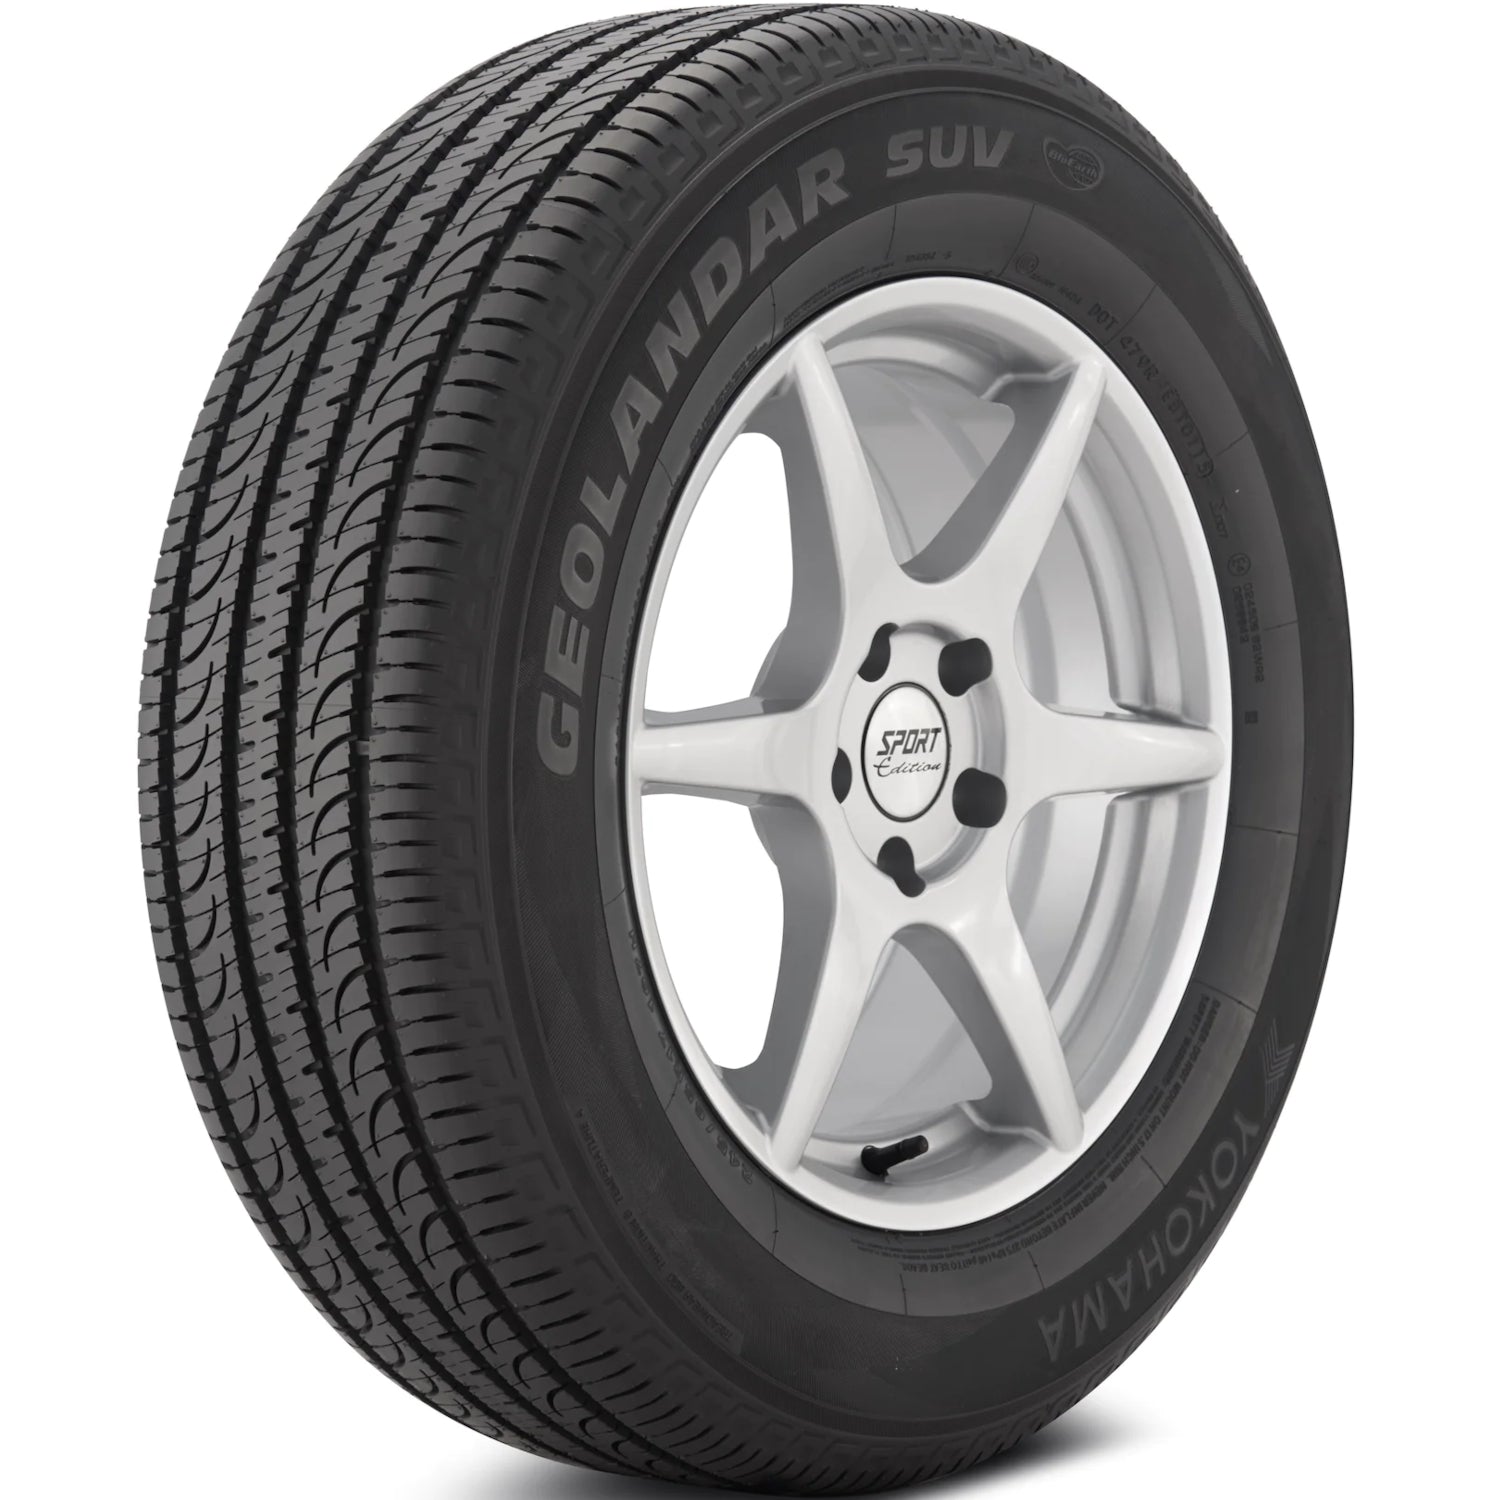 YOKOHAMA GEOLANDAR G055 235/70R16 (28.8X9.4R 16) Tires